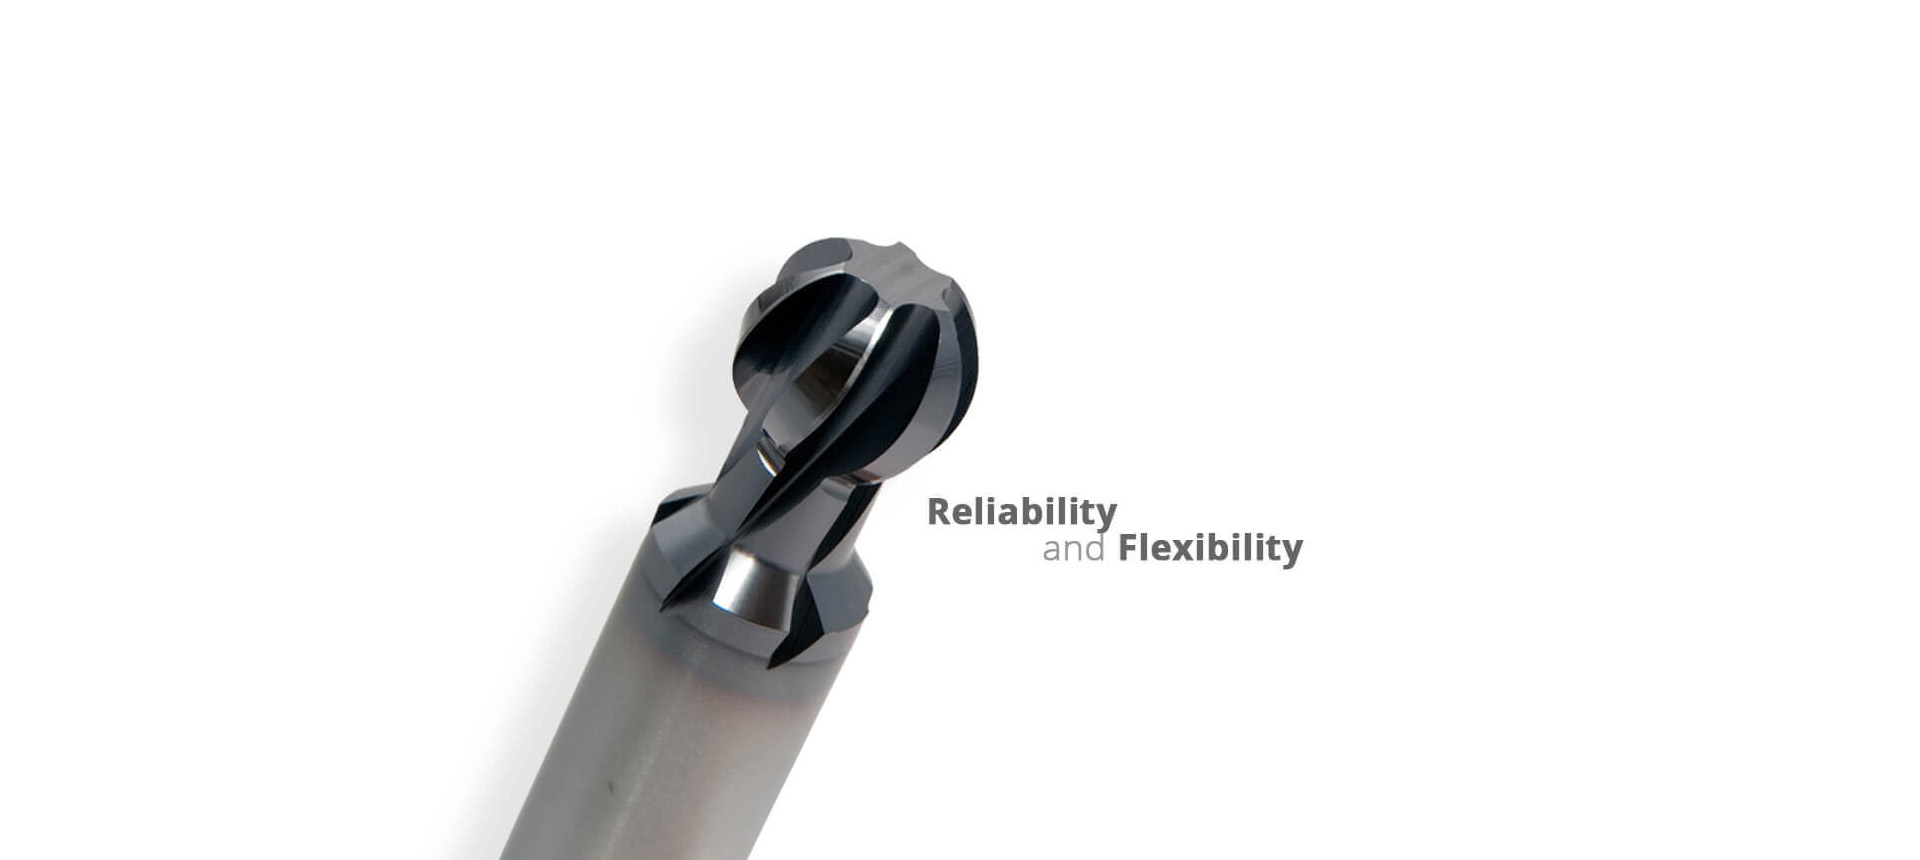 Reliability and Flexibility